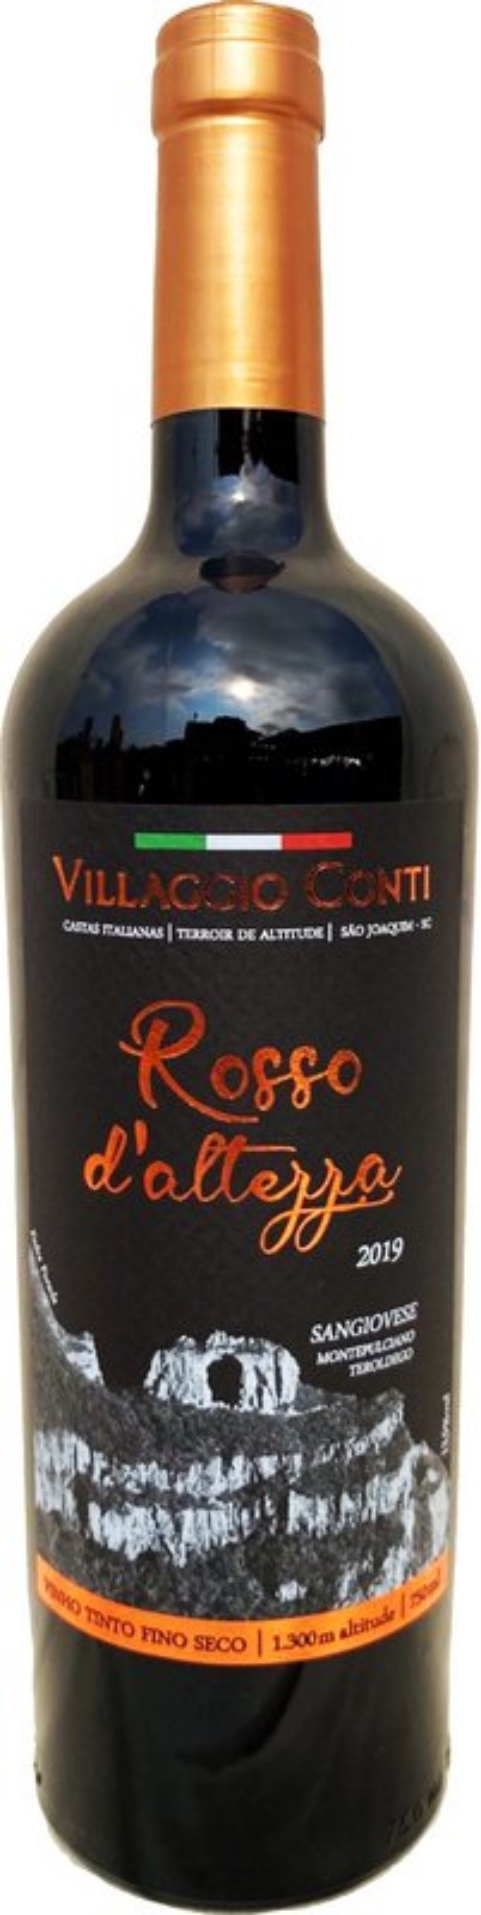 Vinho Rosso D'Altezza 2019 - Sangiovese